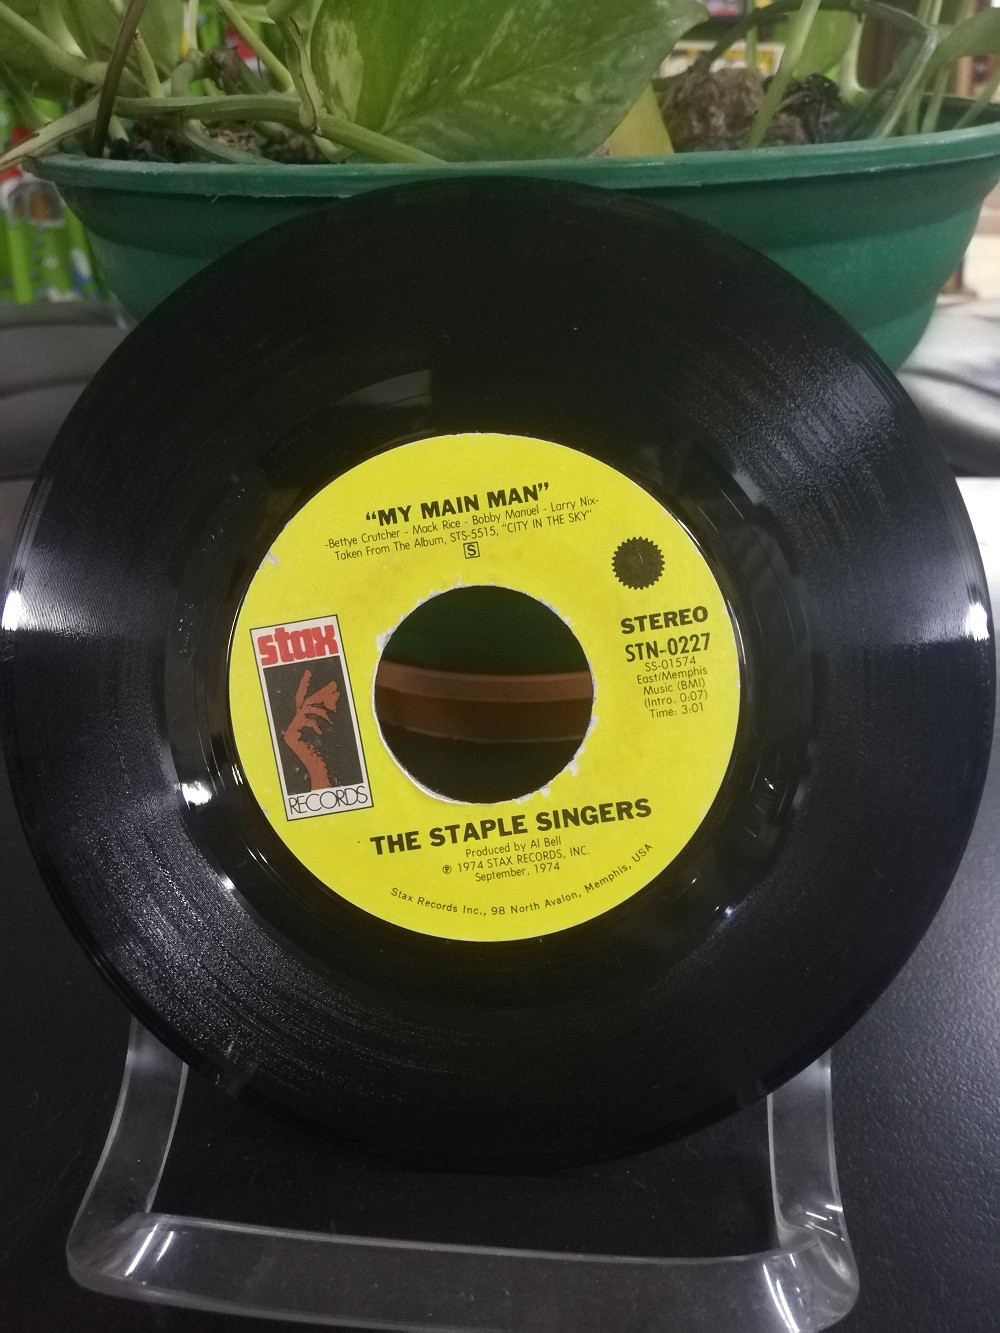 Imagen LP IMPORTADO 45 RPM THE STAPLE SINGERS - WHO MADE THE MAN/MY MAIN MAN 2